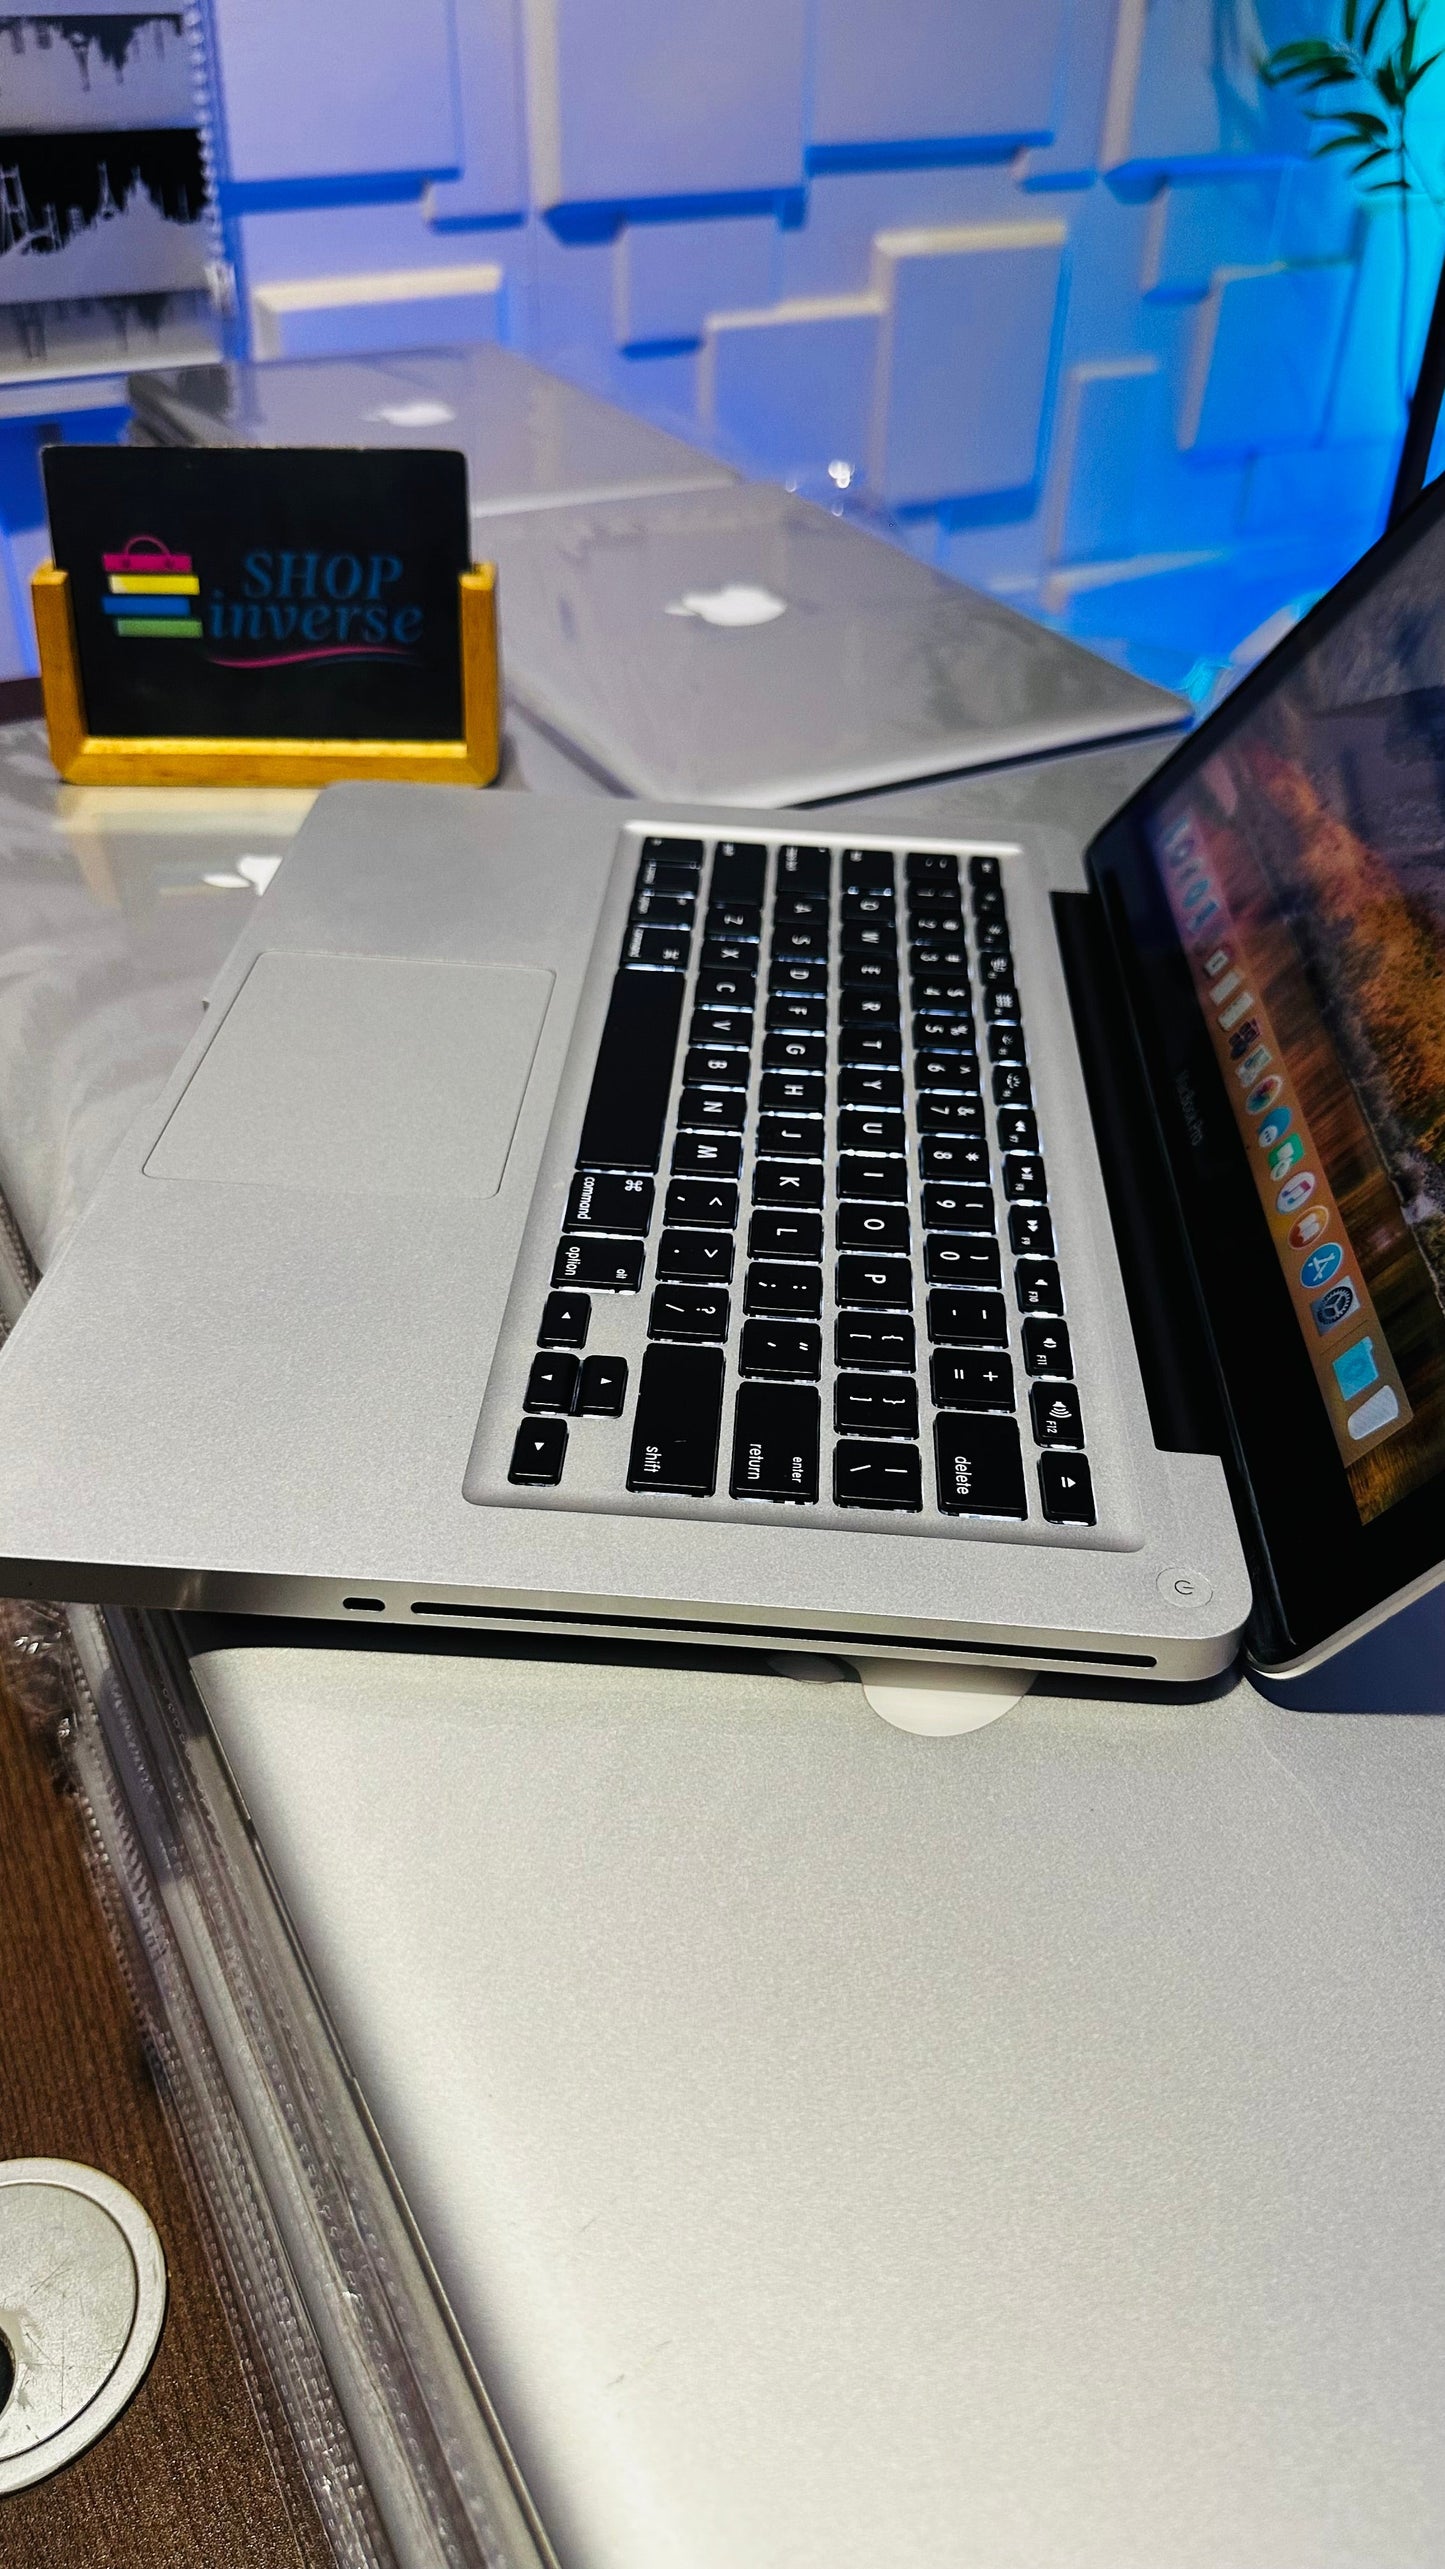 13.3 inches Apple MacBook Pro 2009 - Intel Core 2 Duo - 500GB HDD - 4GB RAM - Keypad Light